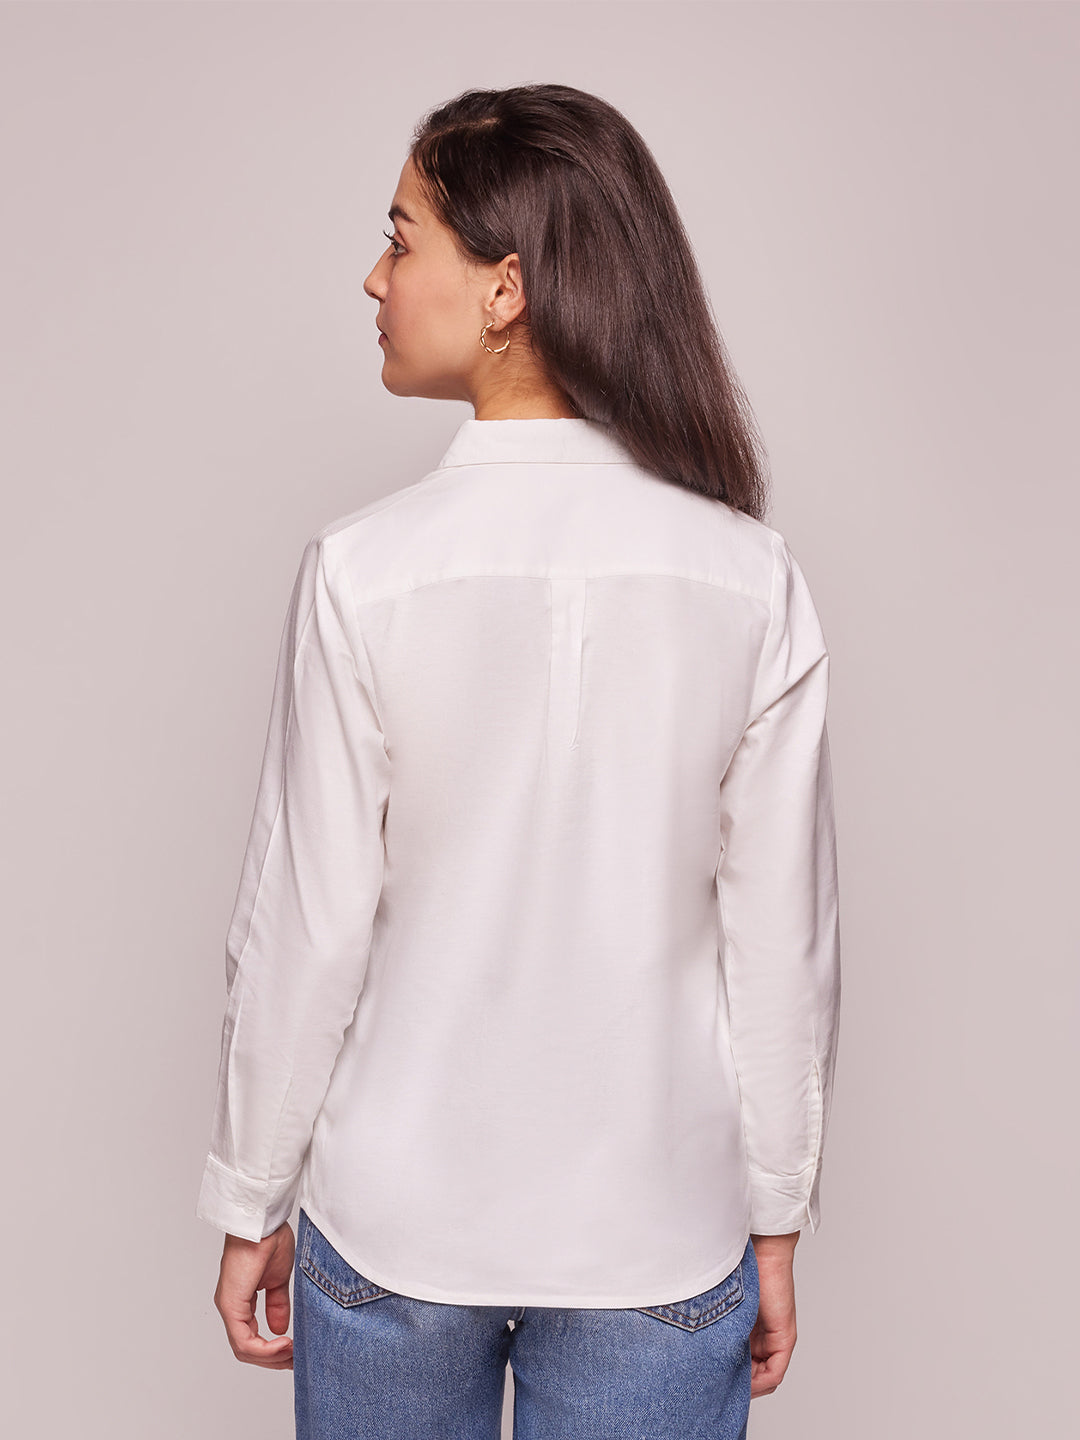 Bombay High Women's Premium Cotton Solid Bright White Oxford Shirt